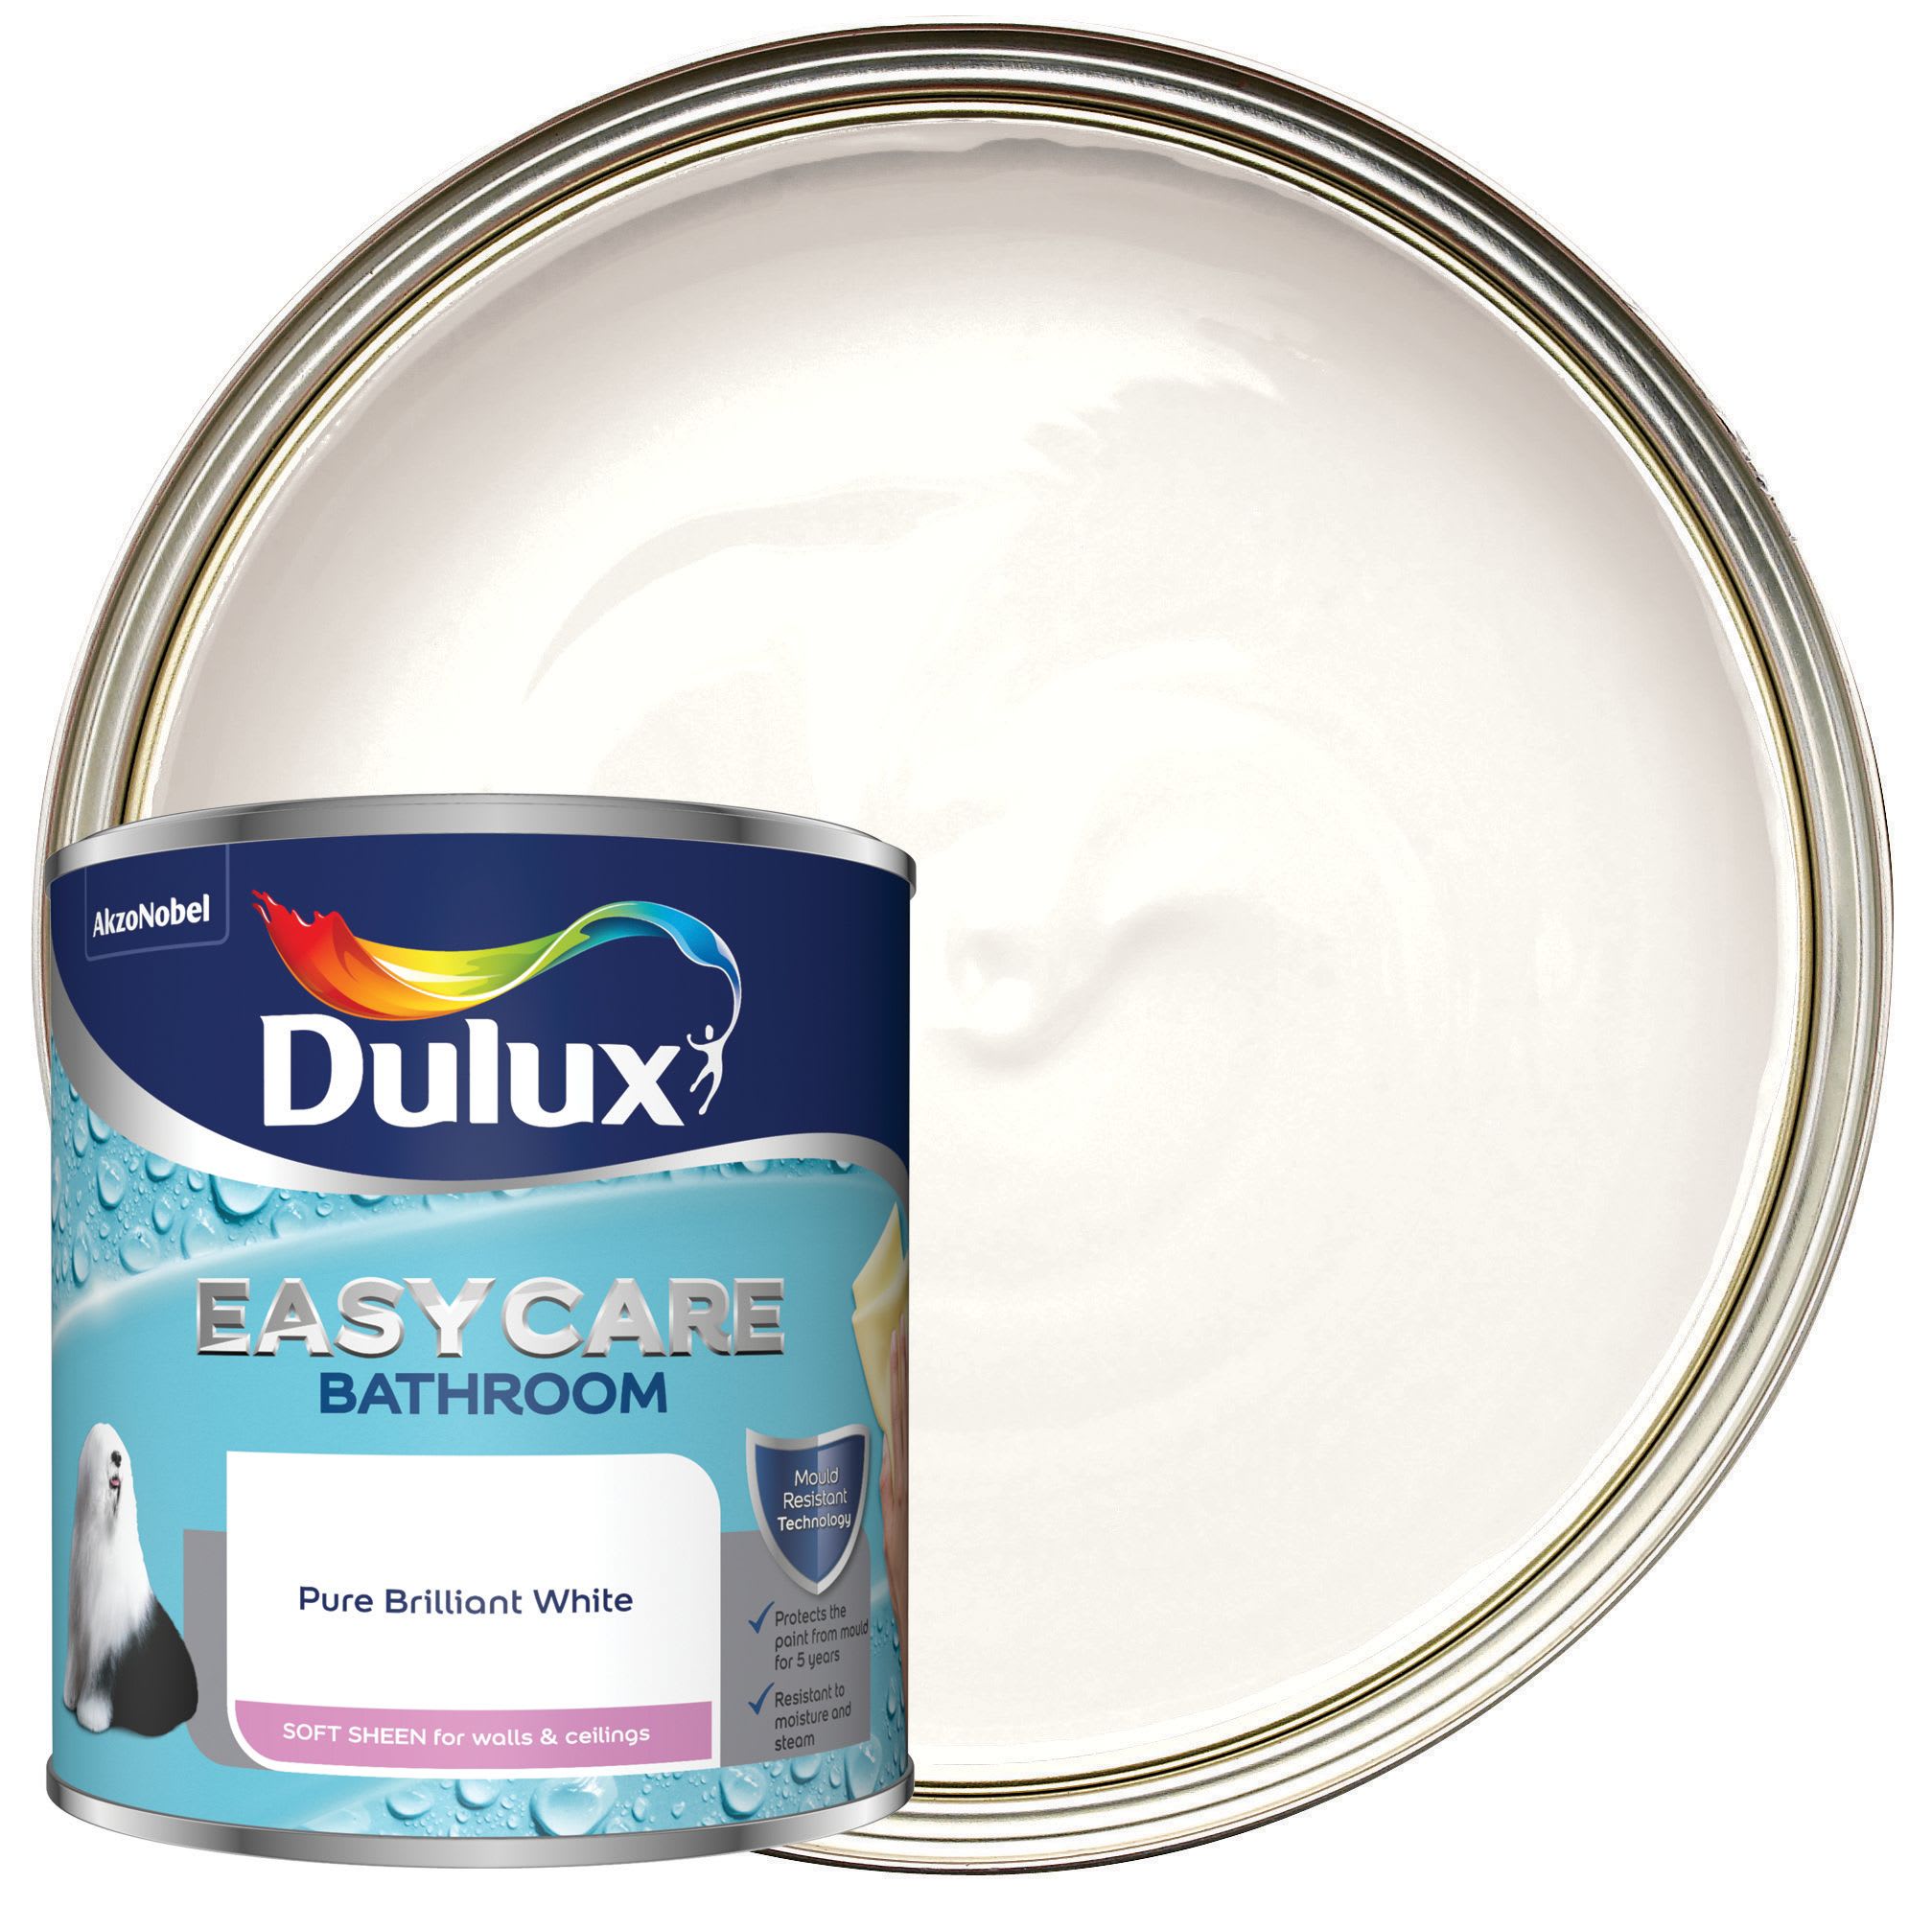 Dulux Easycare Bathroom Paint - Pure Brilliant White